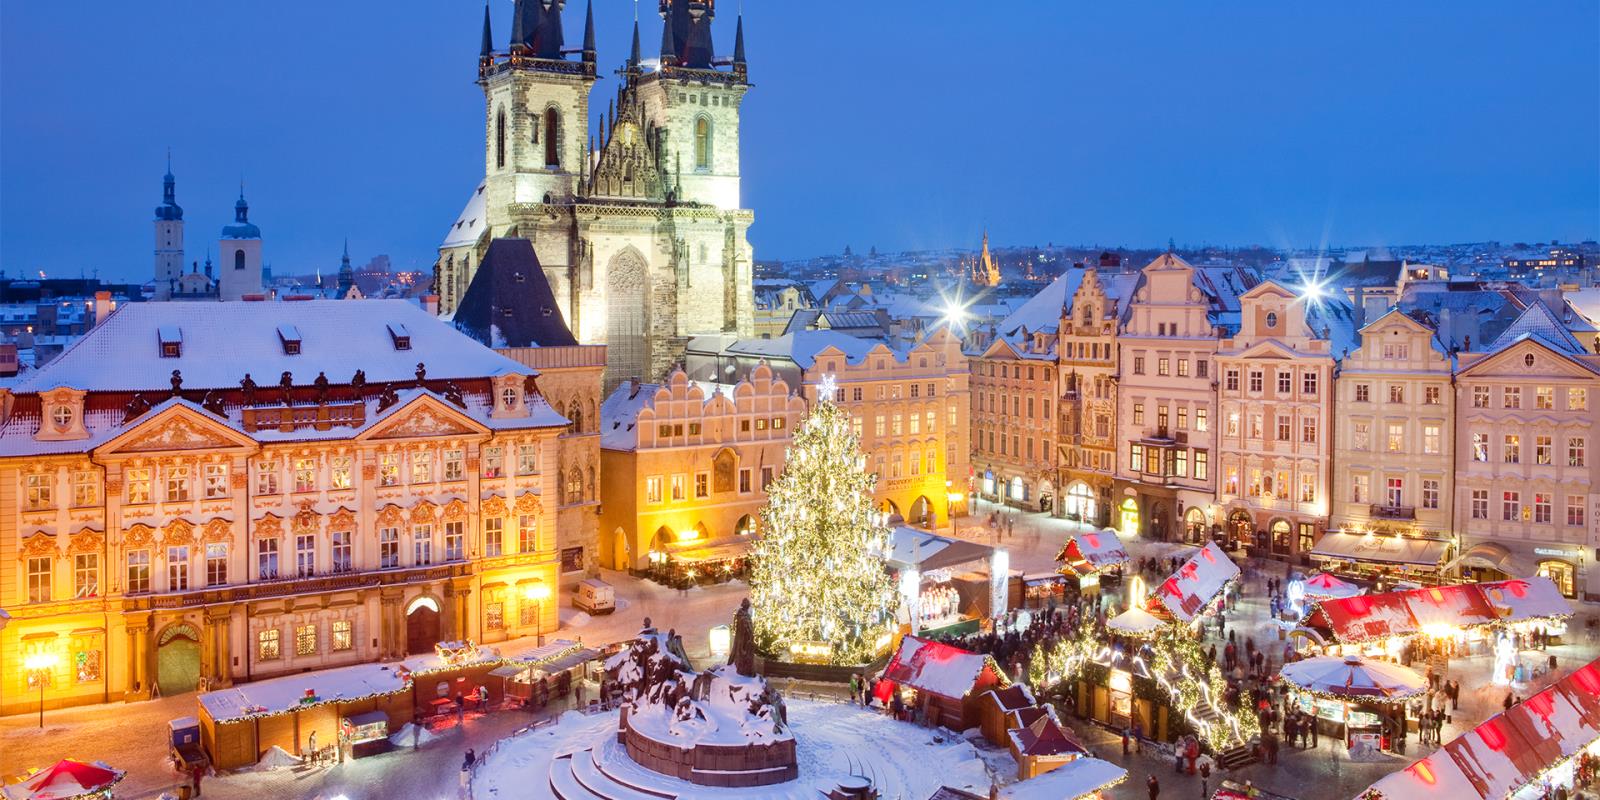 Capodanno a Praga 30 dicembre '17 al 2 gennaio '18